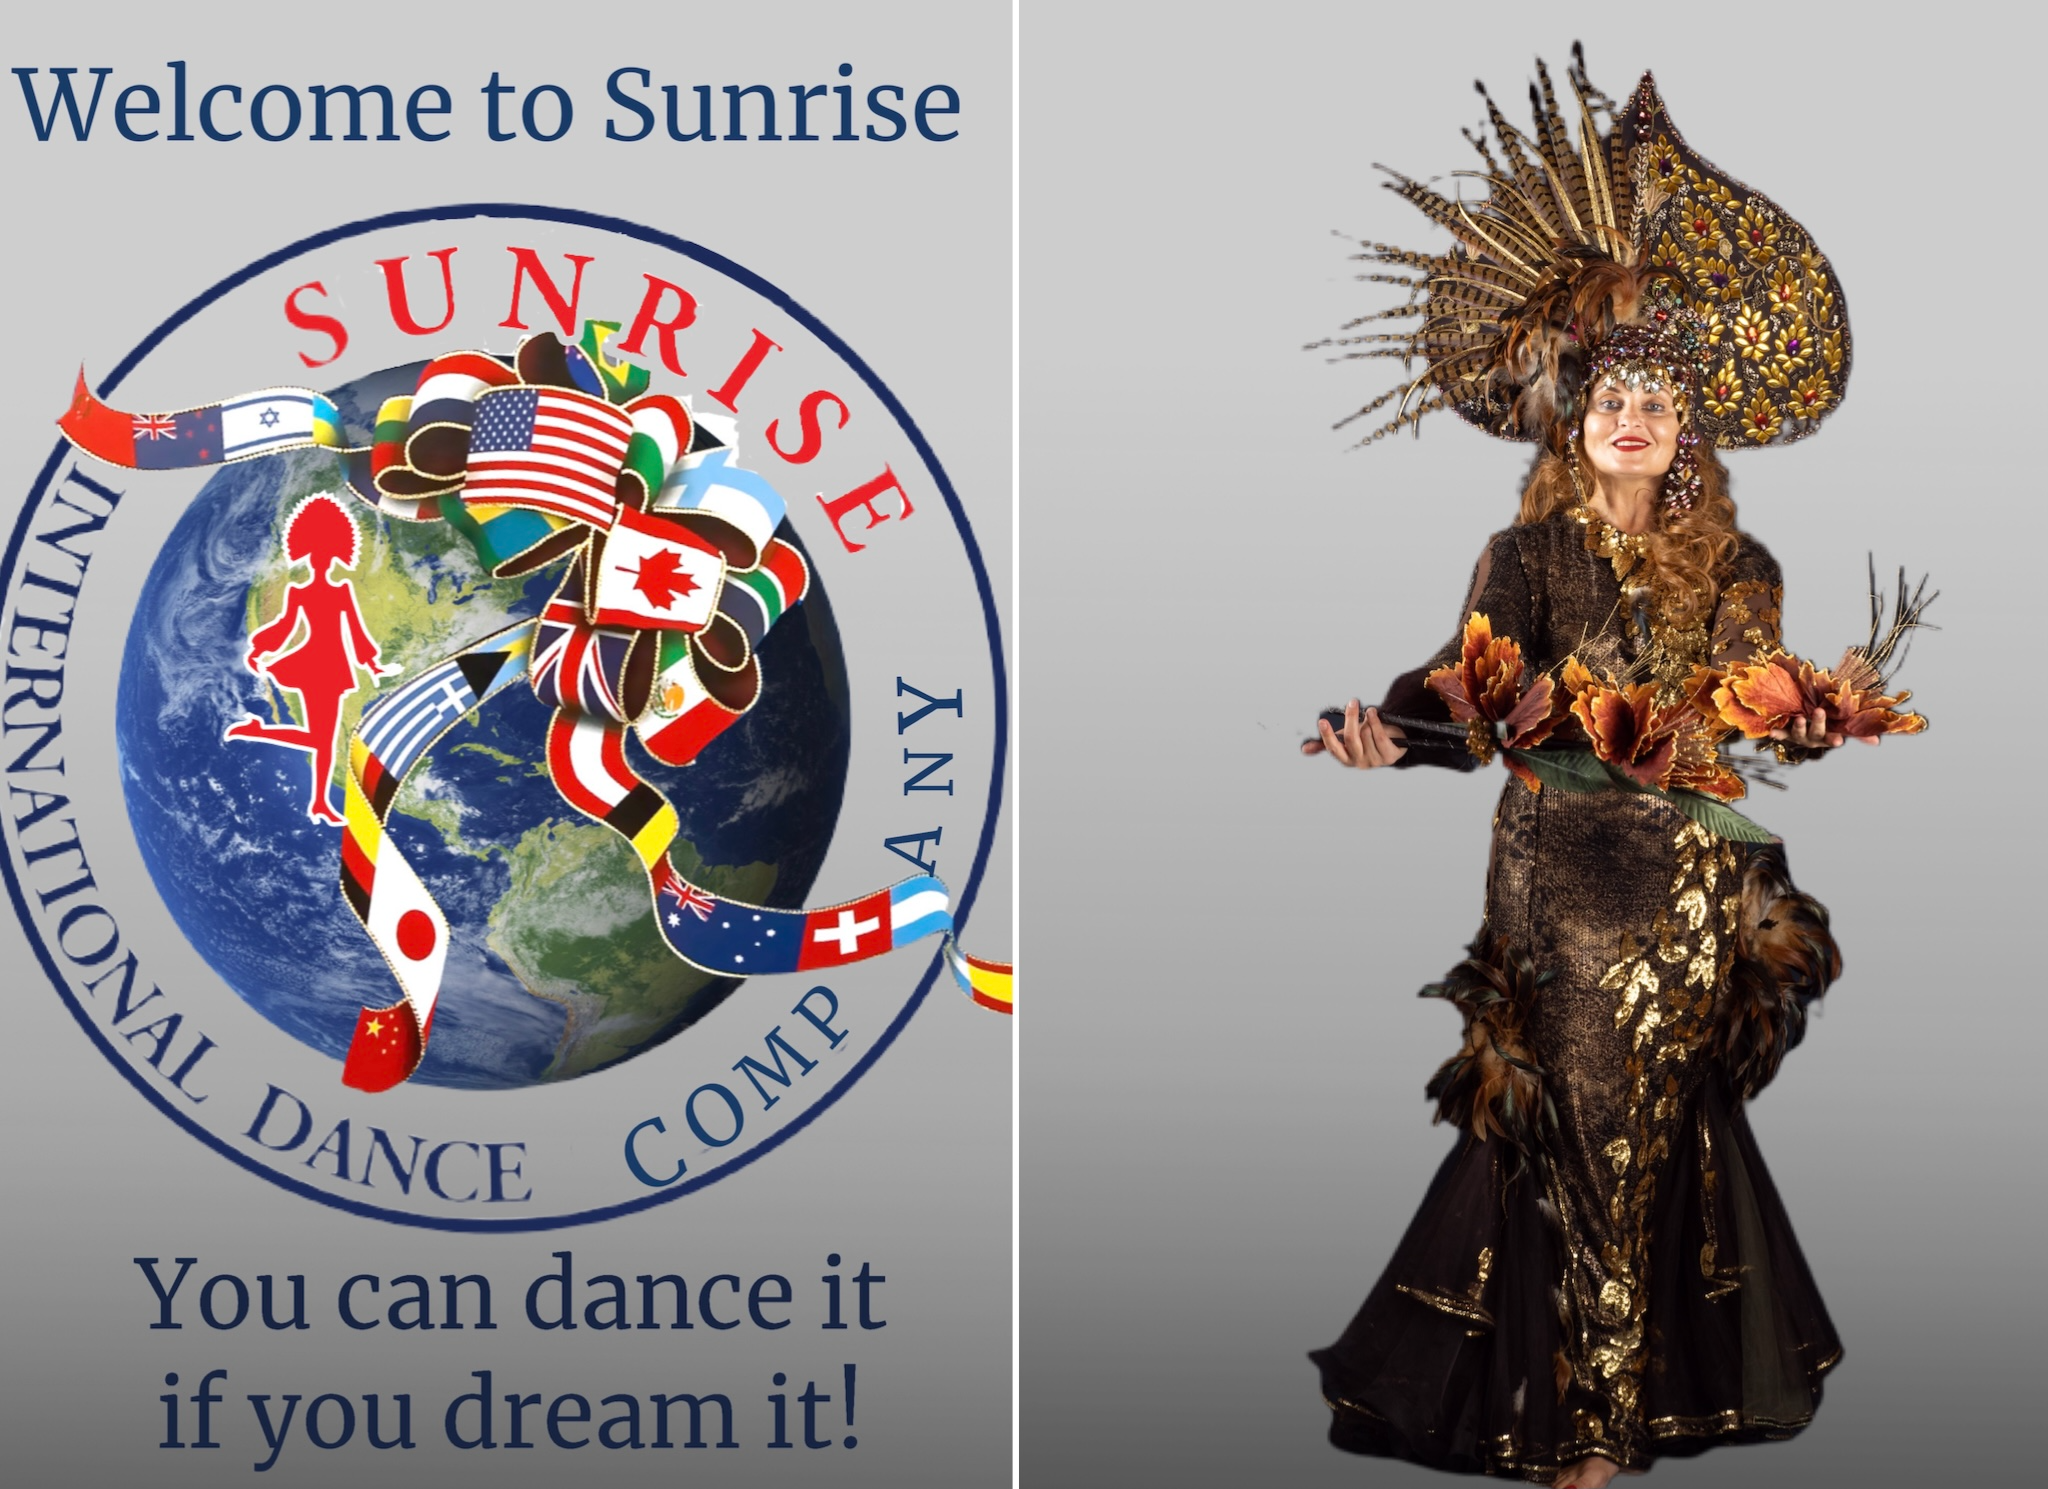 Sunrise International Dance Company